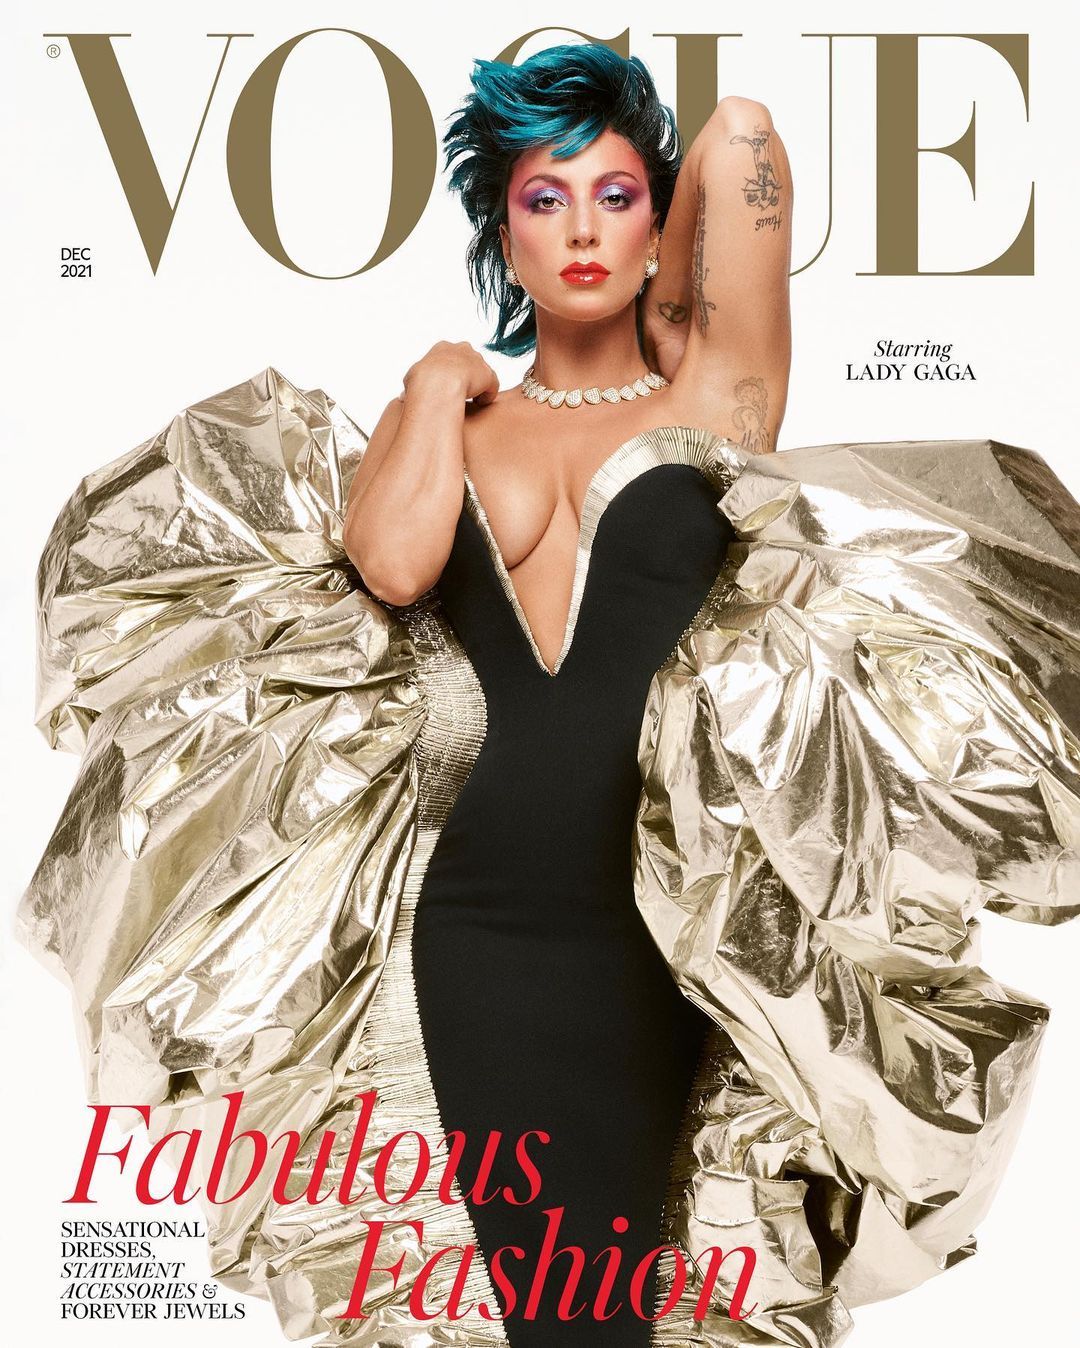 Lady Gaga di cover British Vogue